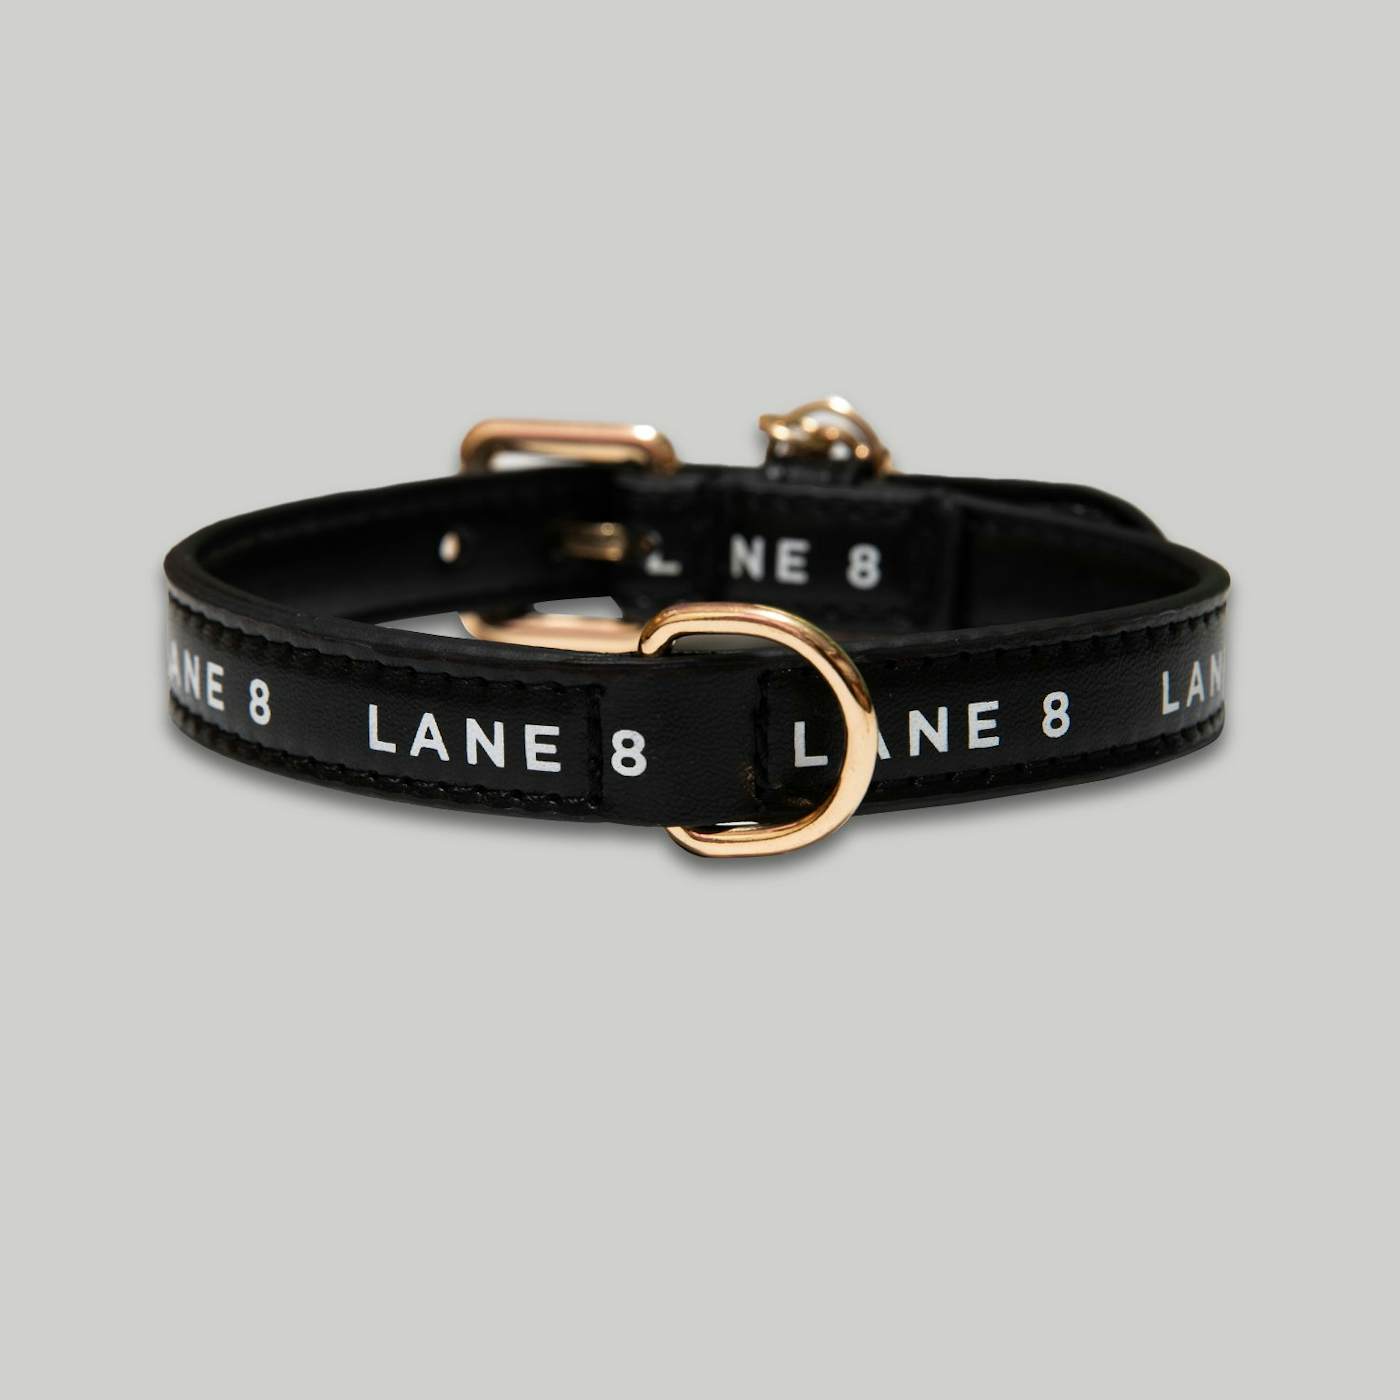 Lane 8 Cat Collar $20.00